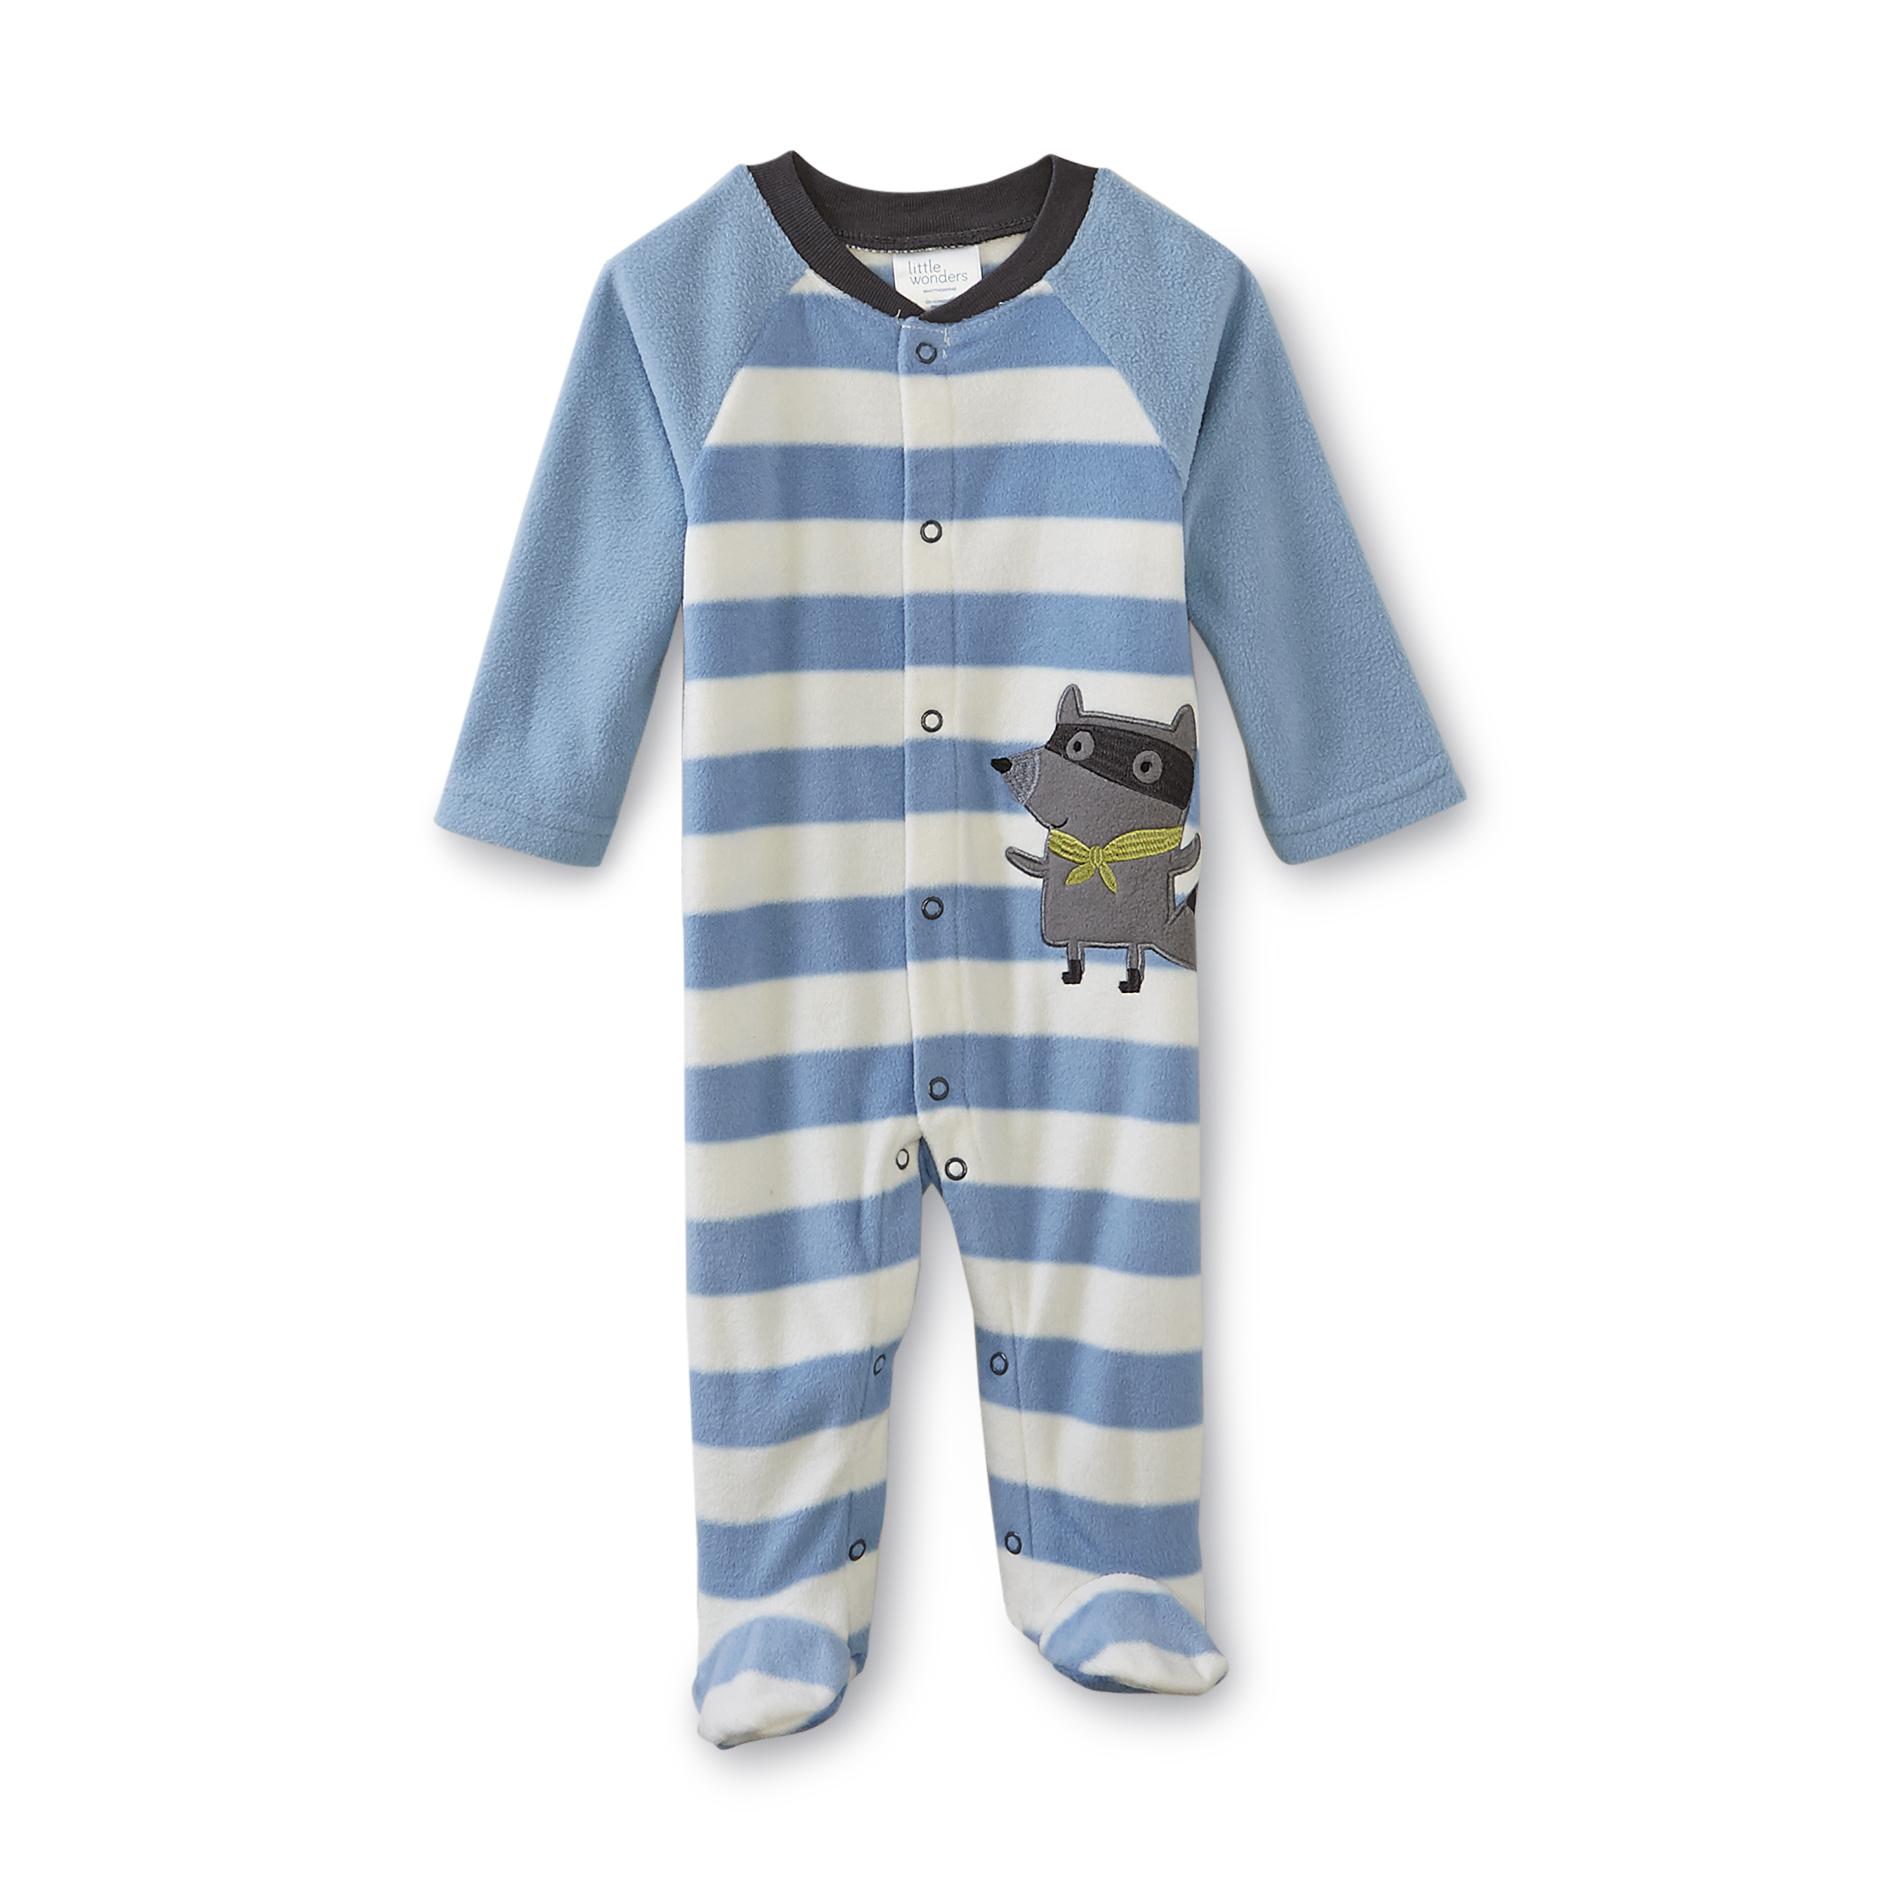 Little Wonders Newborn Boy's Fleece Sleeper Pajamas - Raccoon